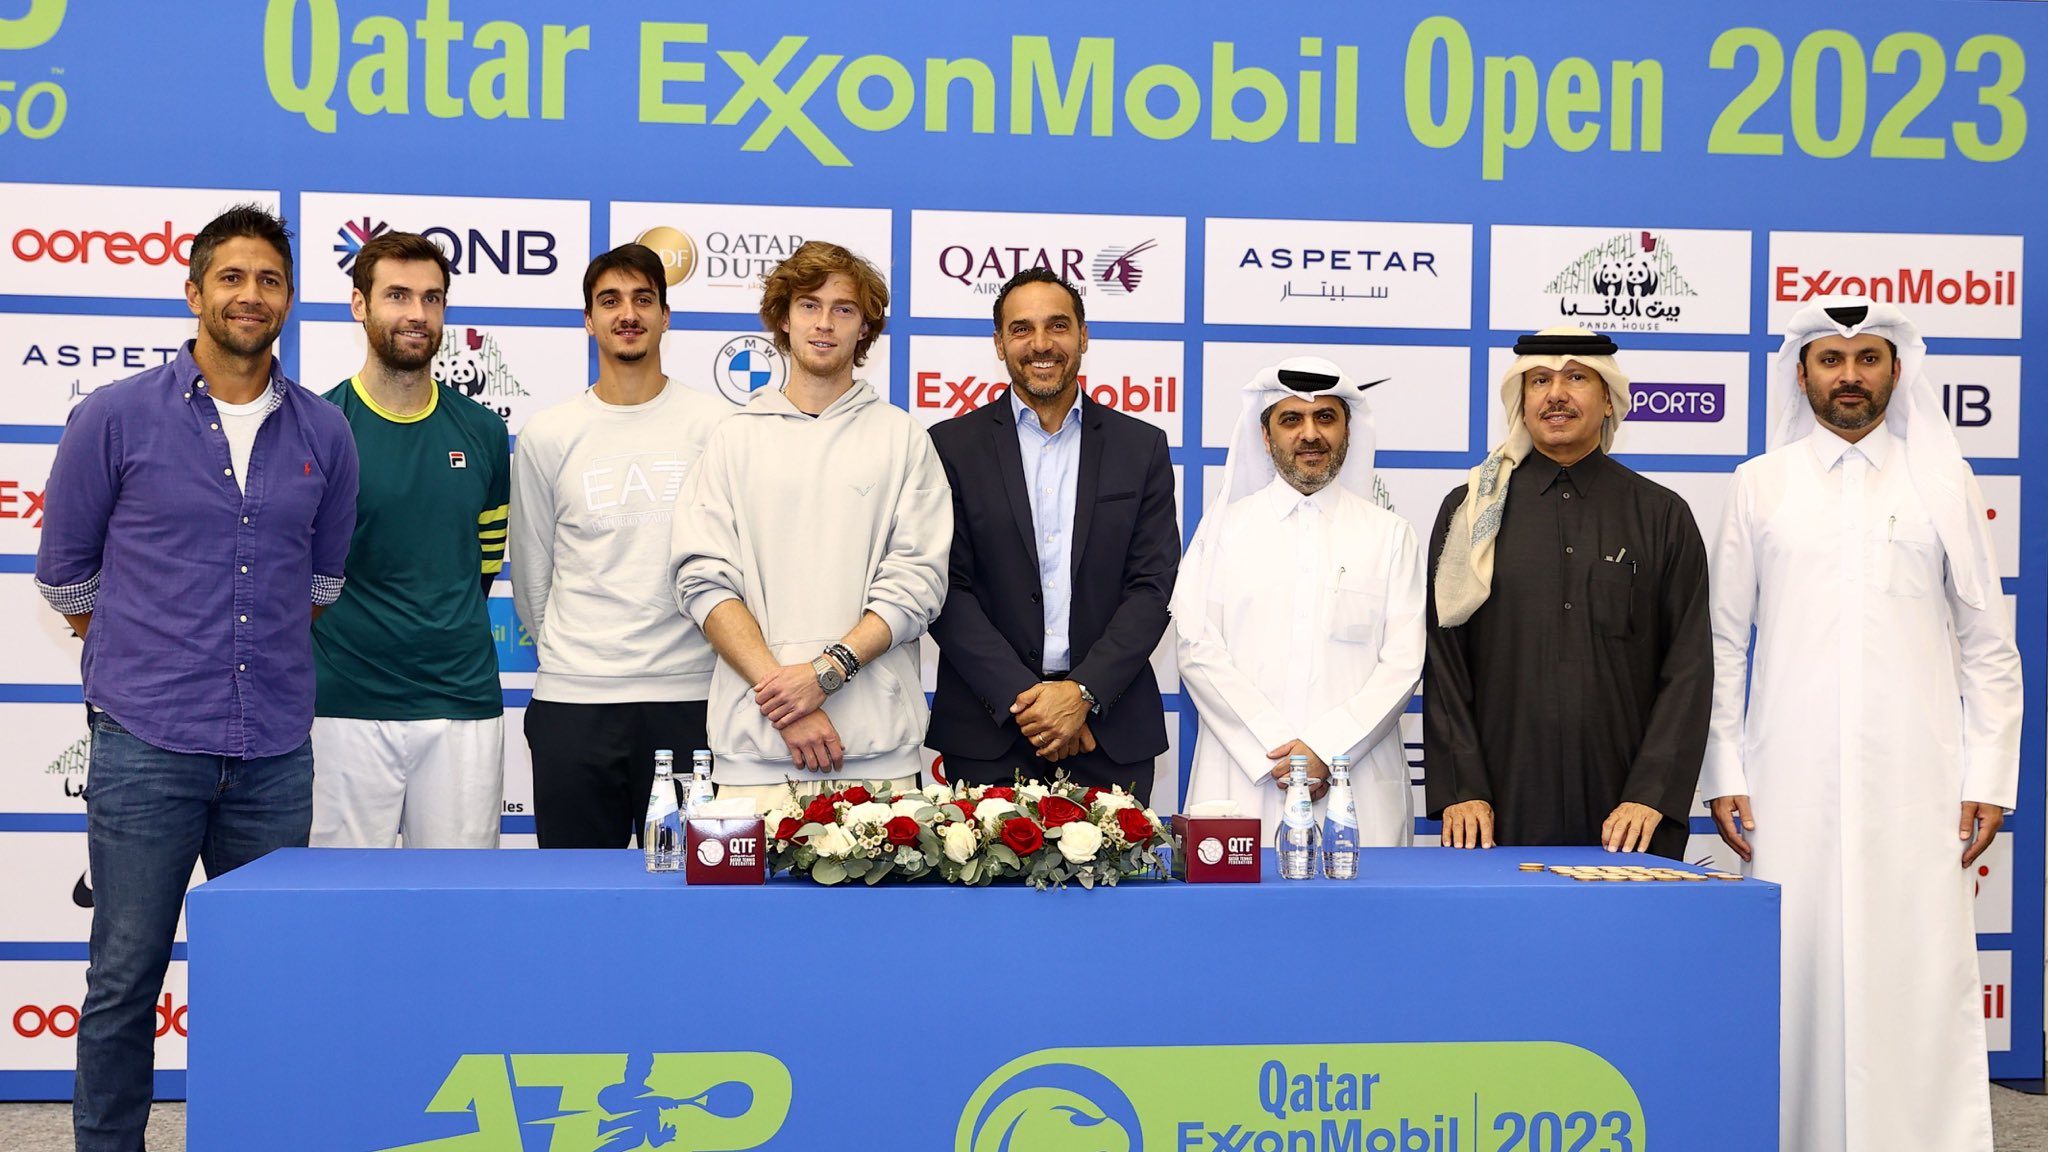 Qatar ExxonMobil Open 2023 in full swing Doha News Qatar